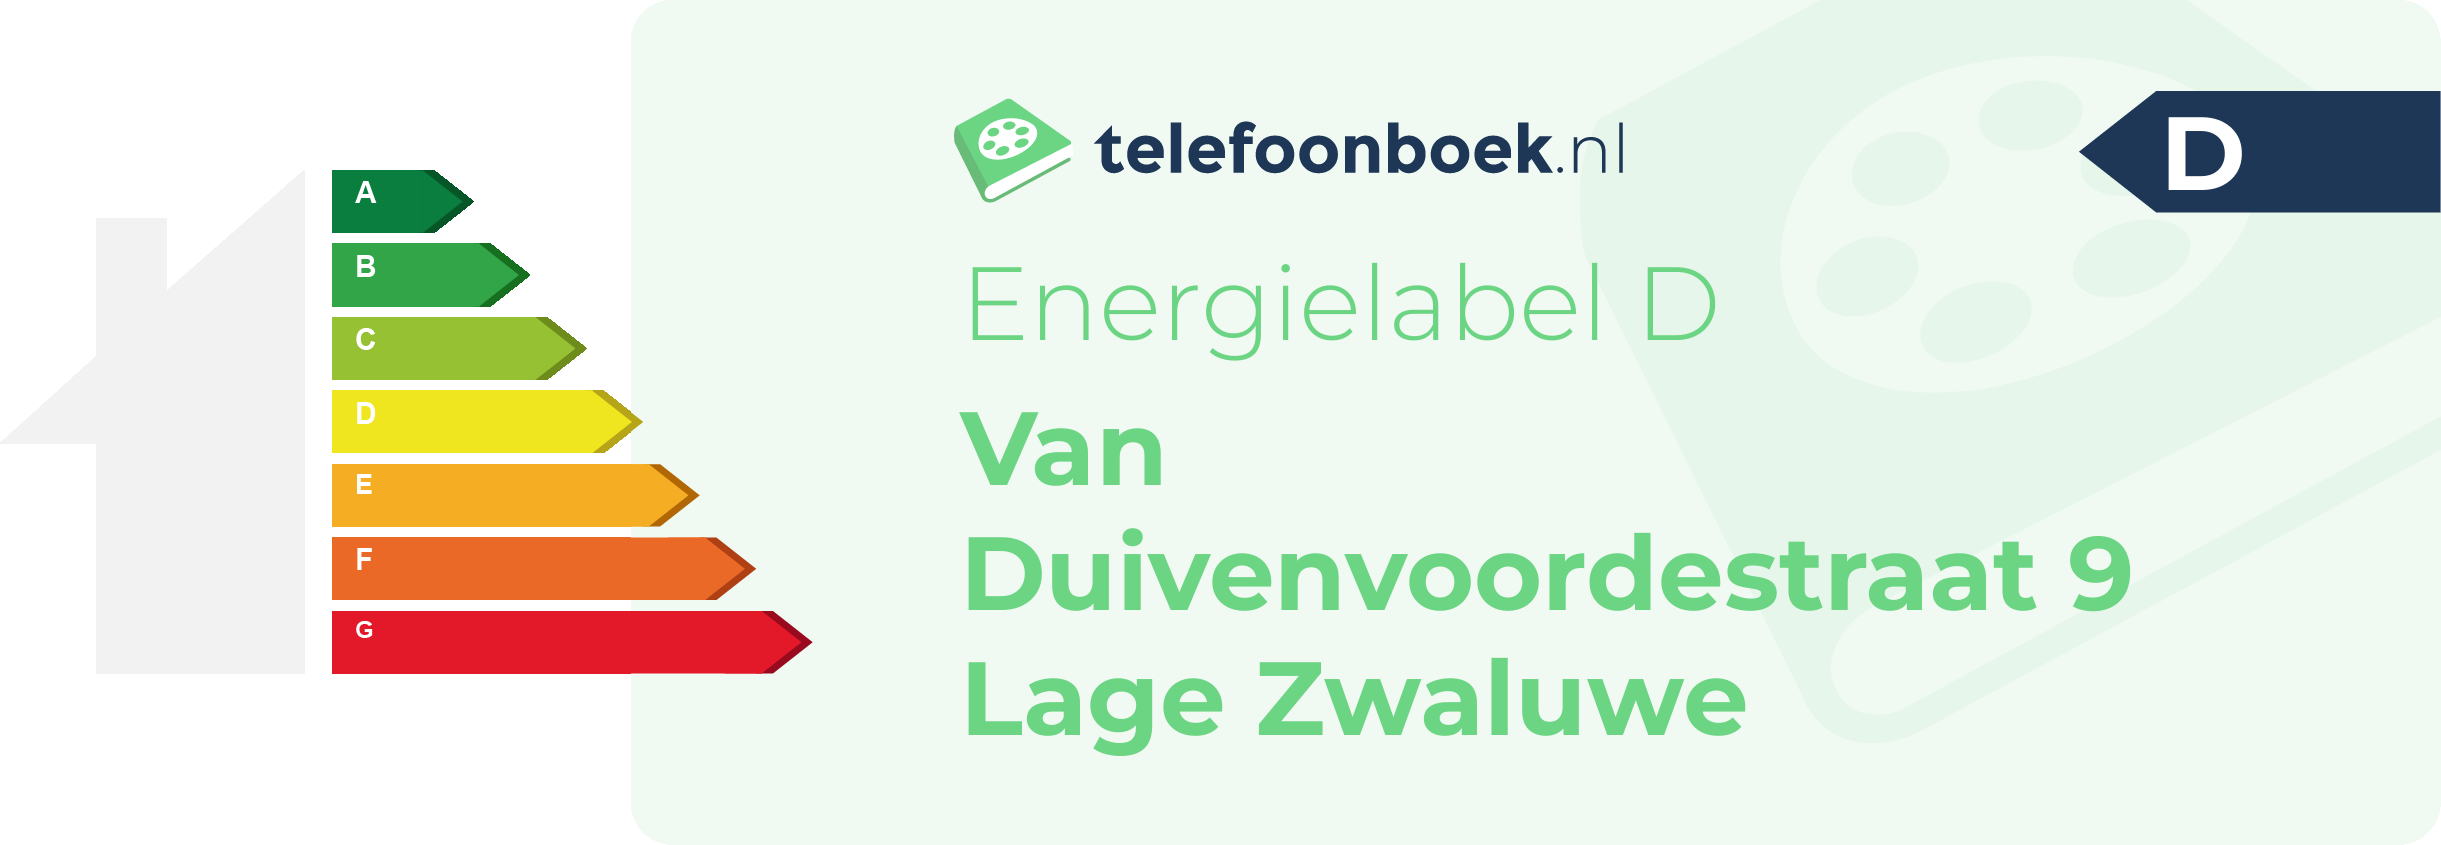 Energielabel Van Duivenvoordestraat 9 Lage Zwaluwe